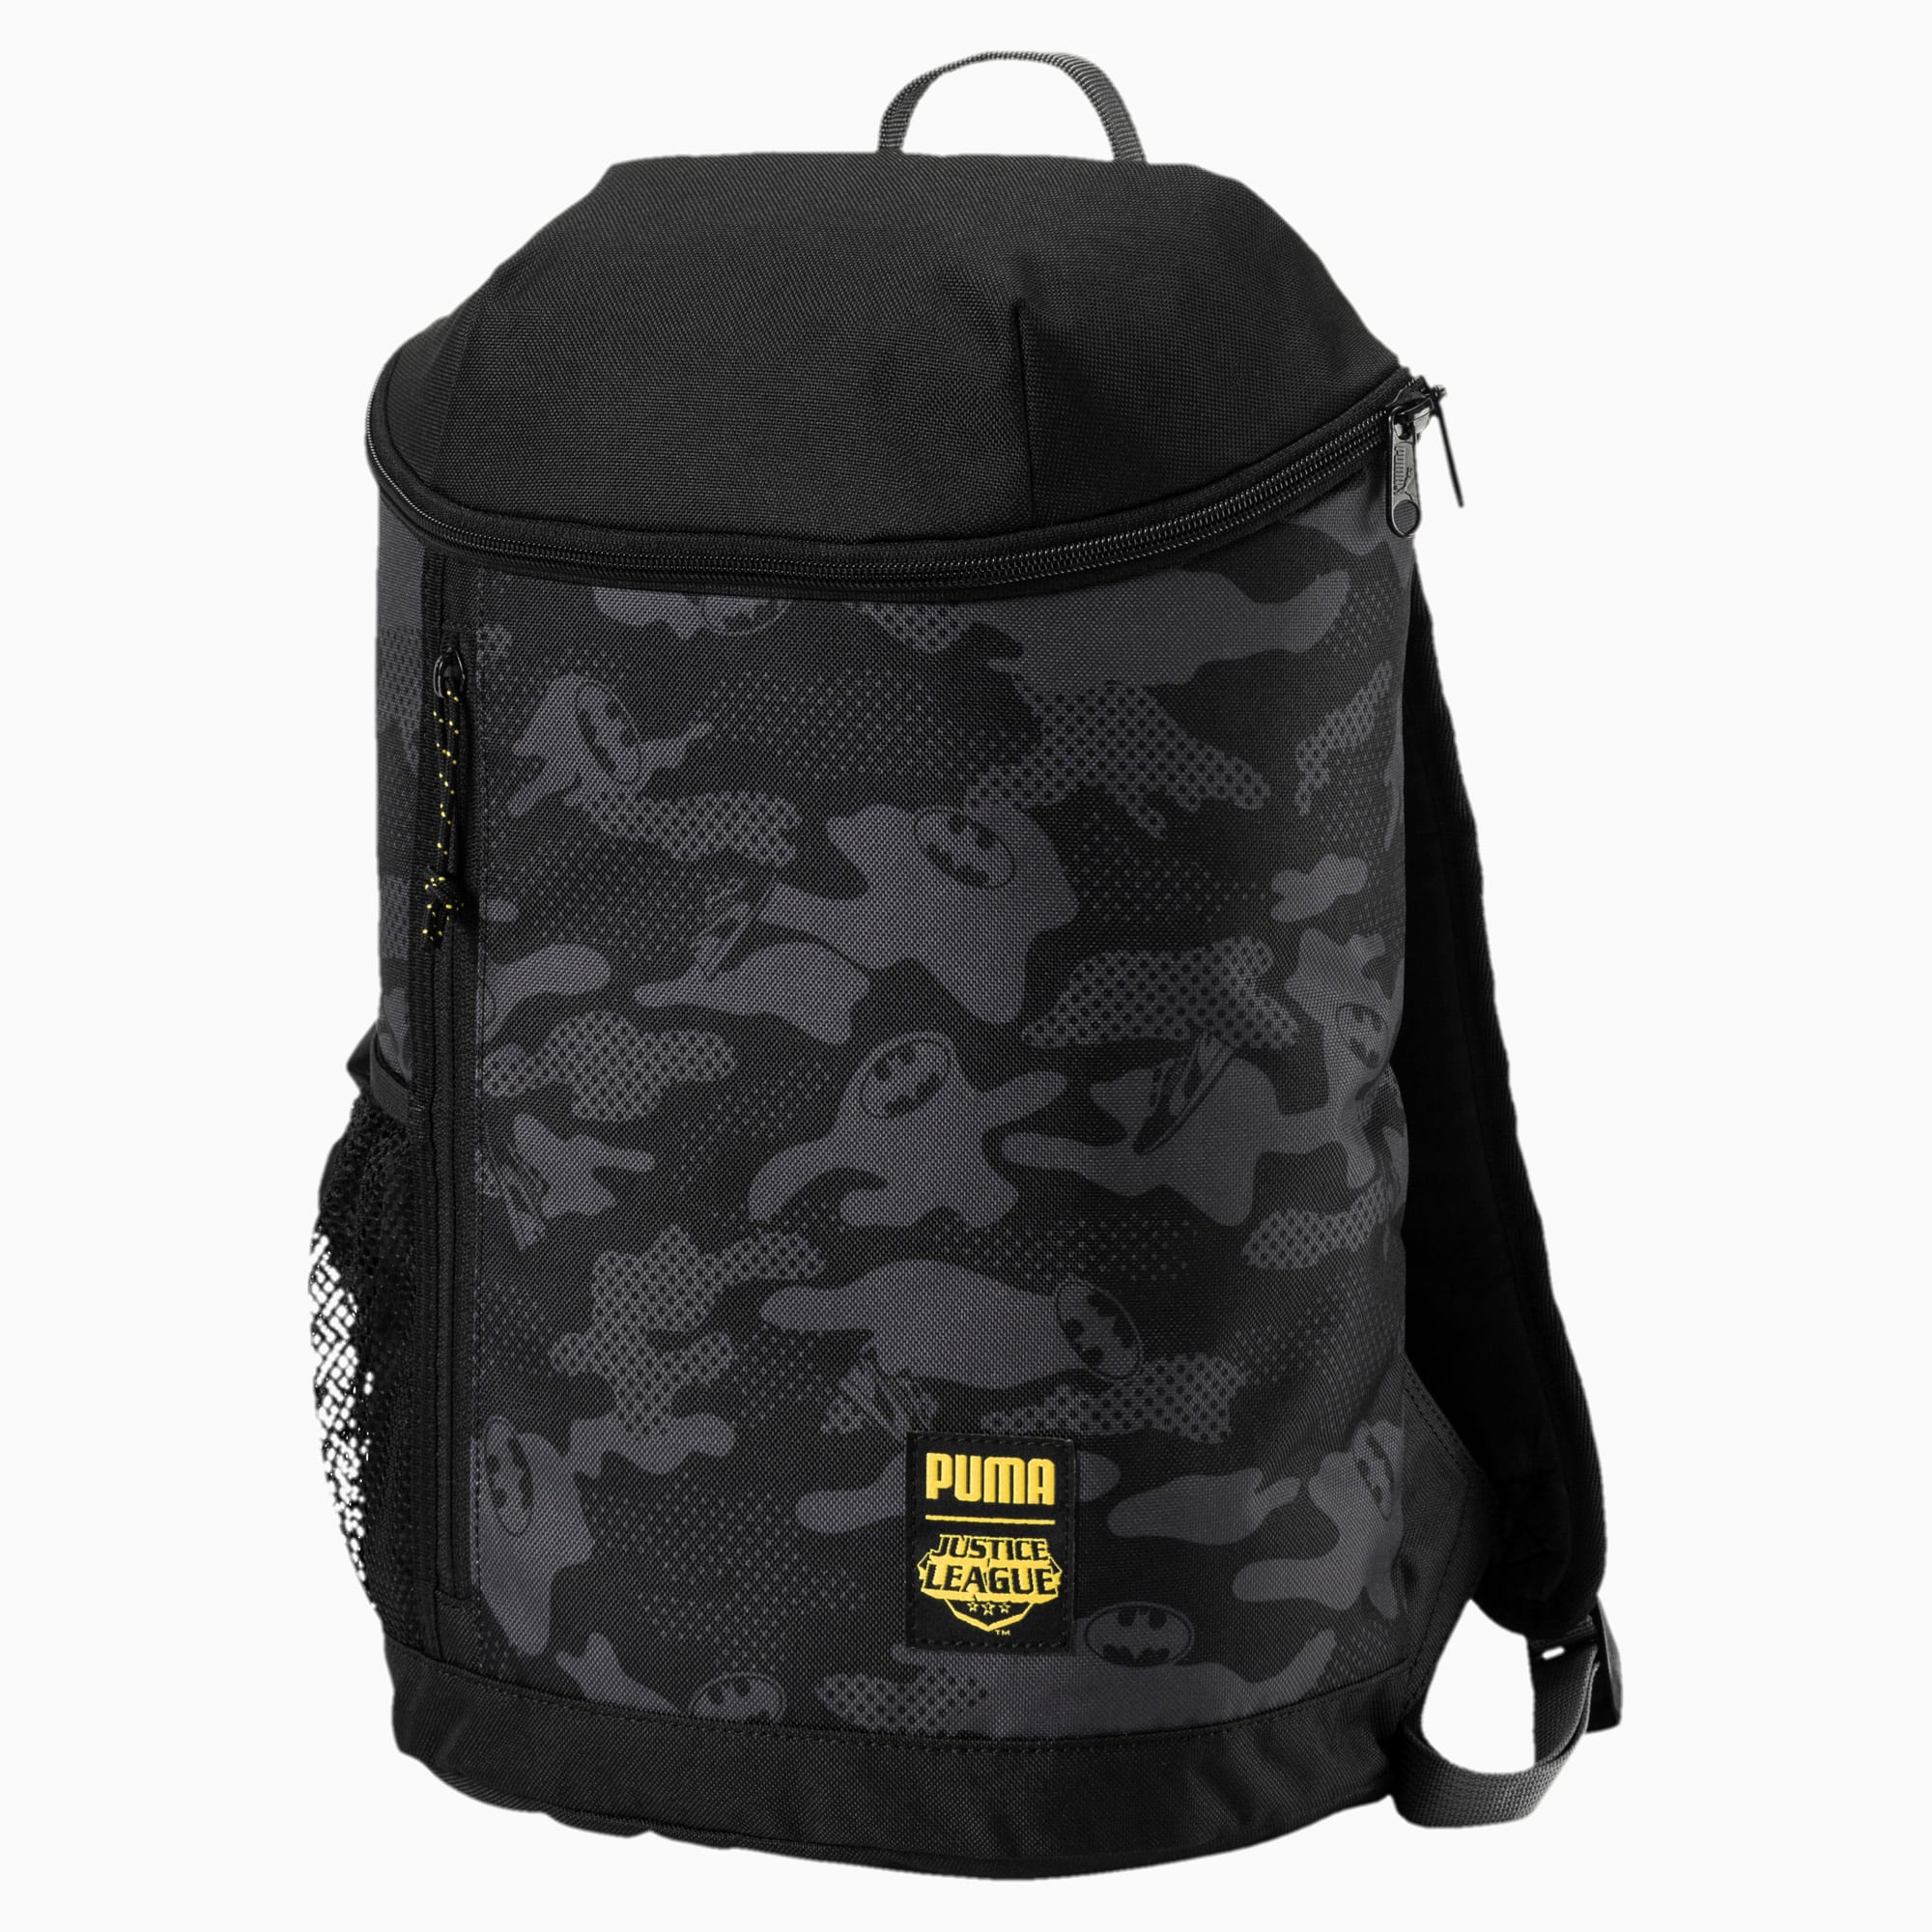 puma justice league backpack